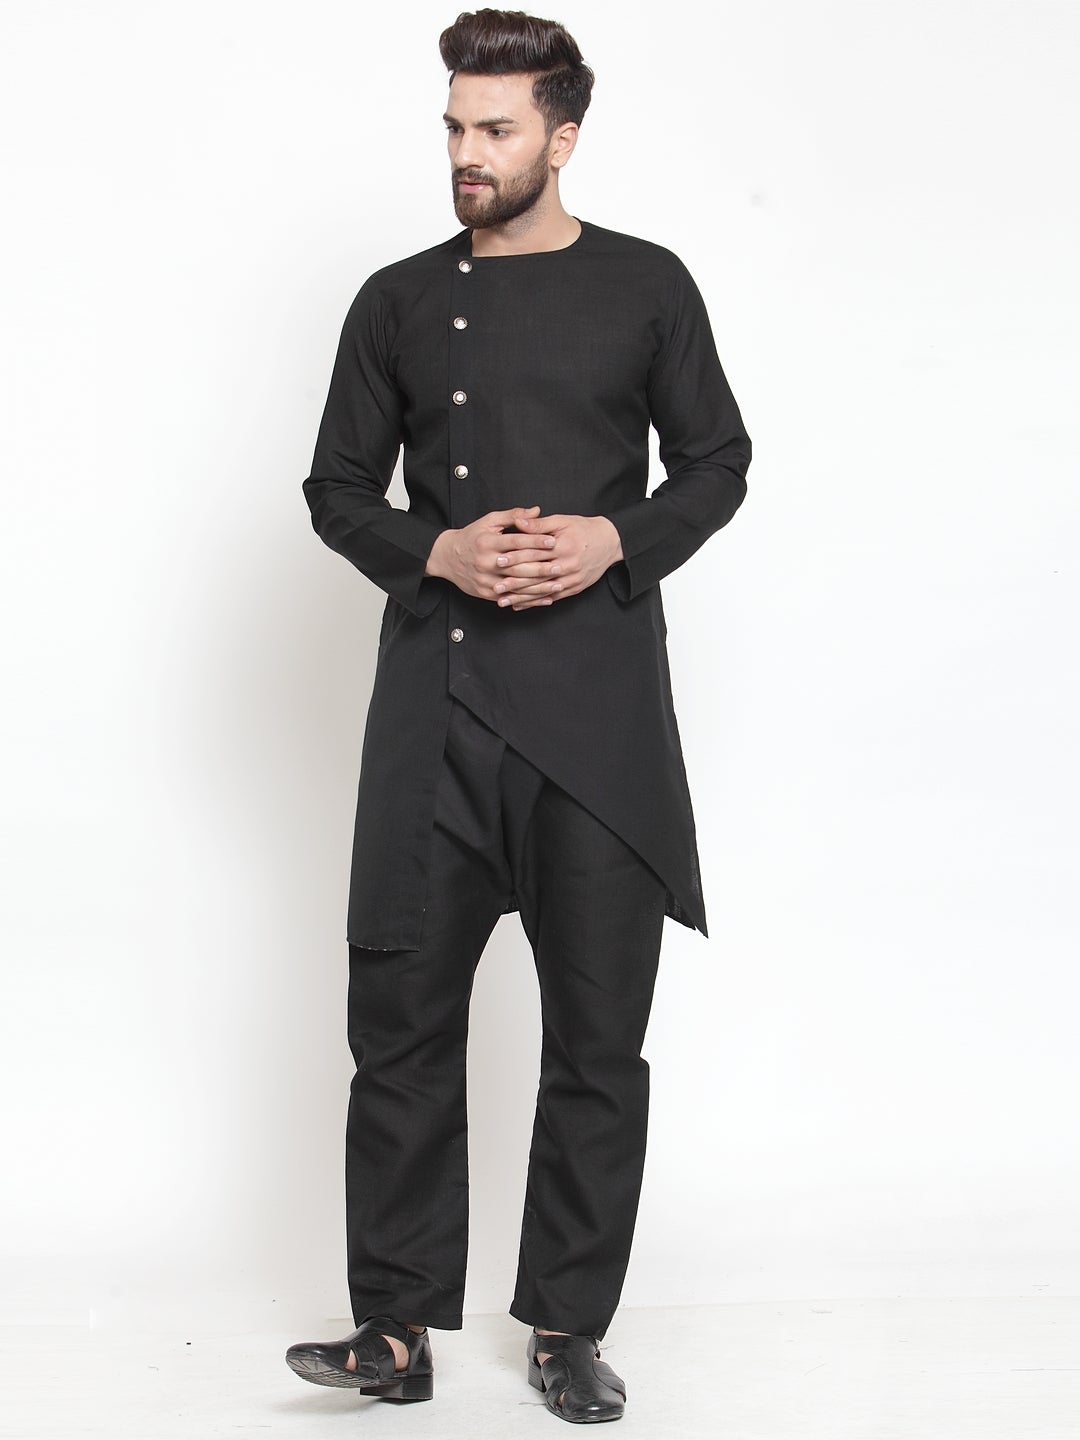 Designer Linen Kurta Black Pajama Set